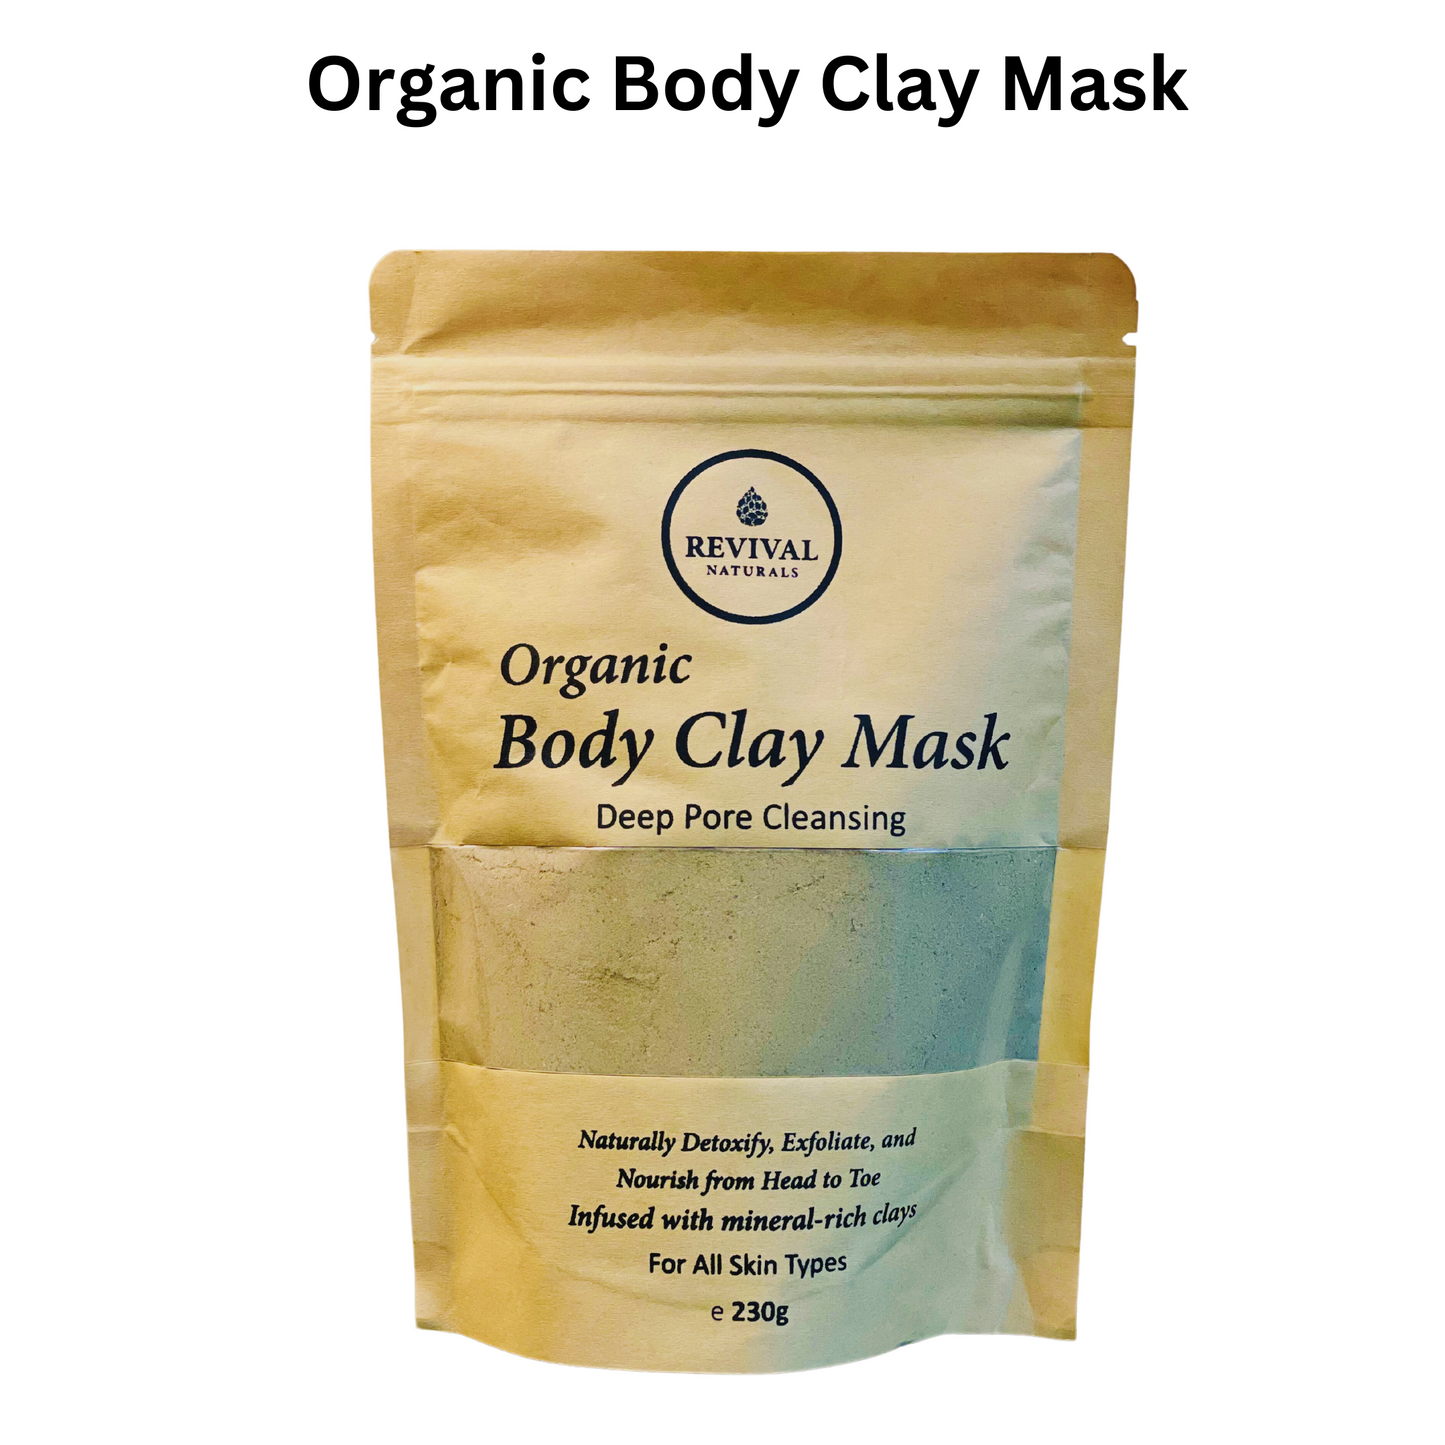 Organic Body Clay Mask